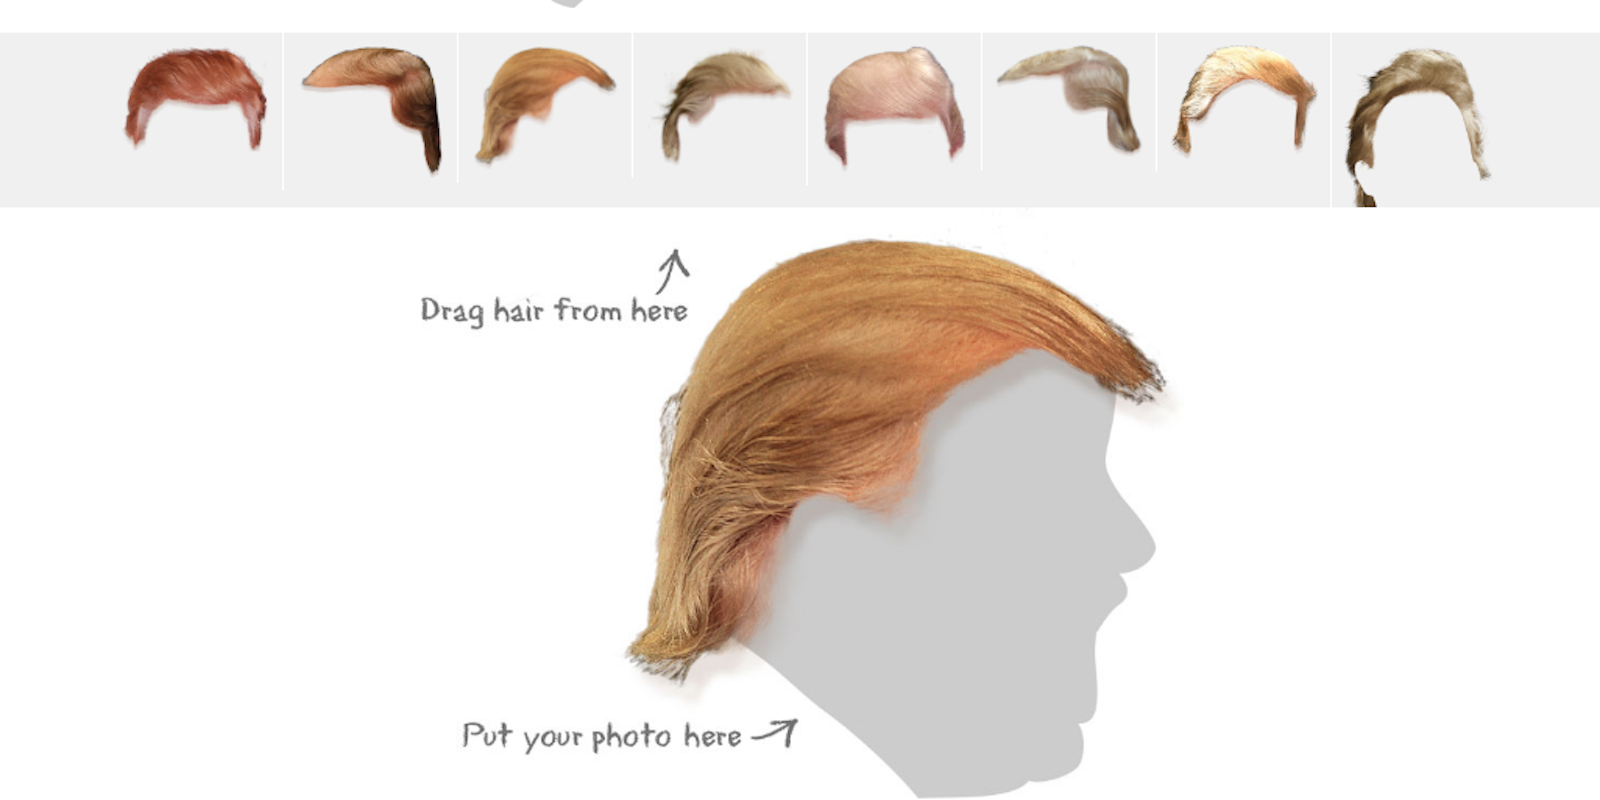 trump's hair